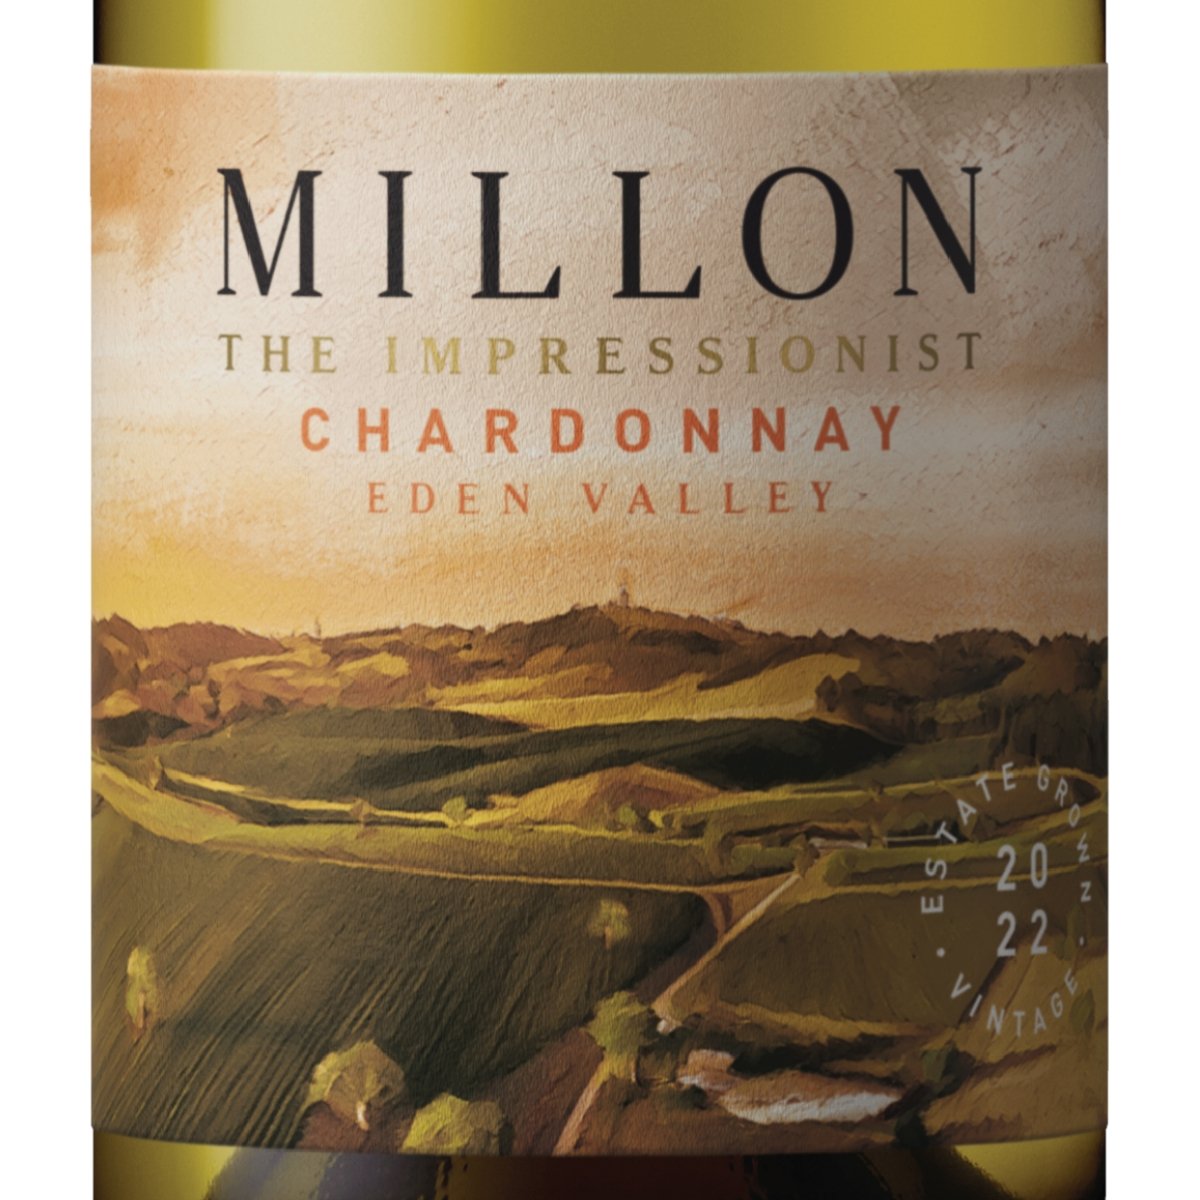 2022 The Impressionist Chardonnay - Millon Wines